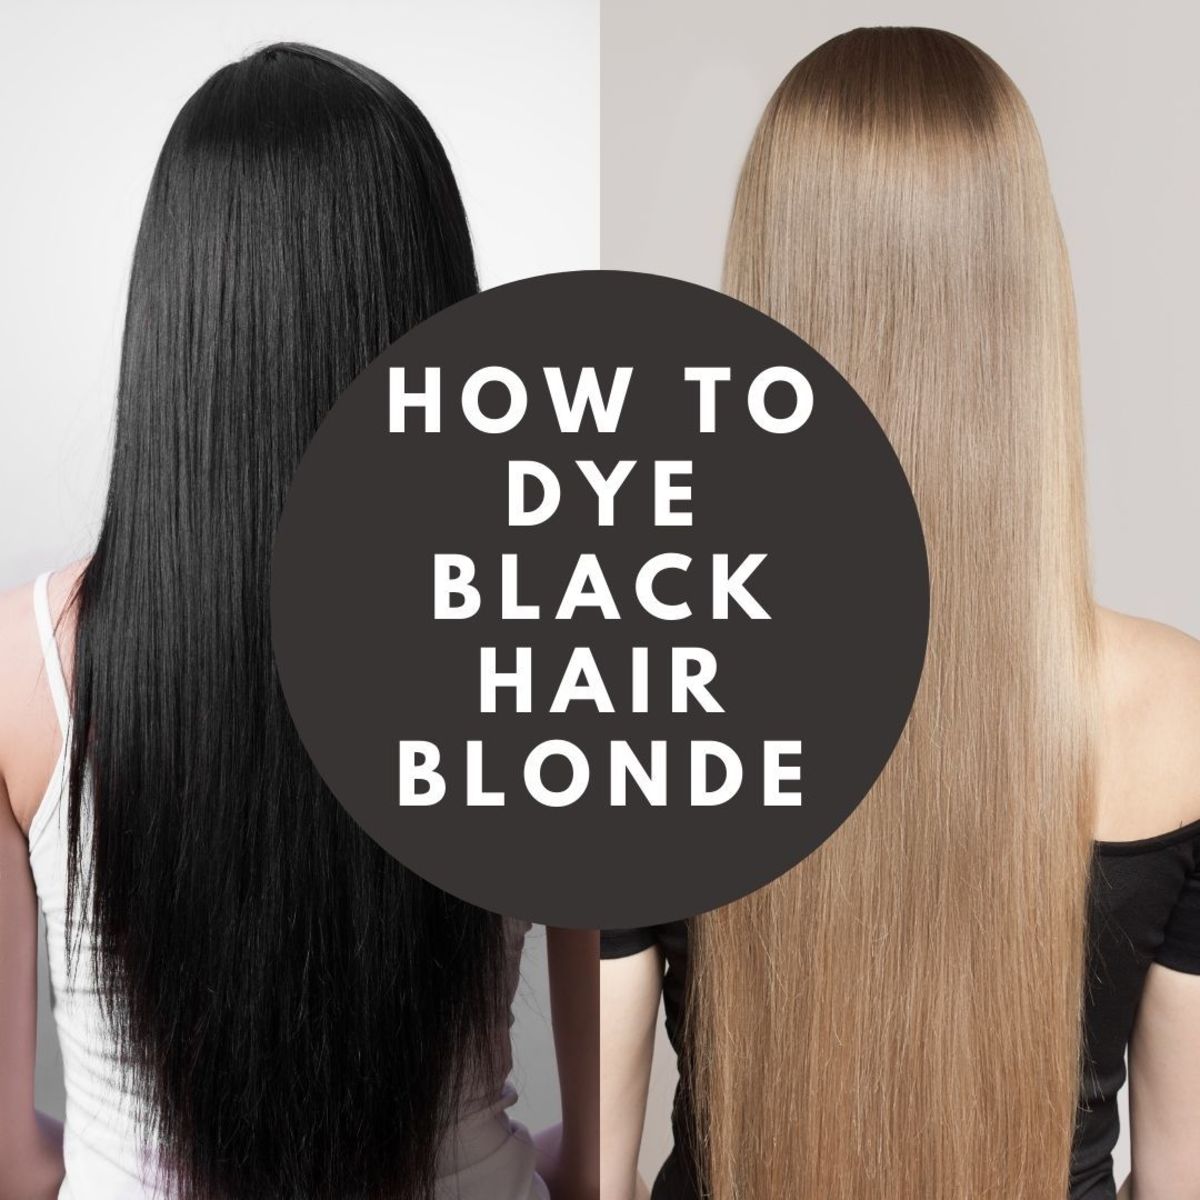 How to Dye Black Hair Blonde